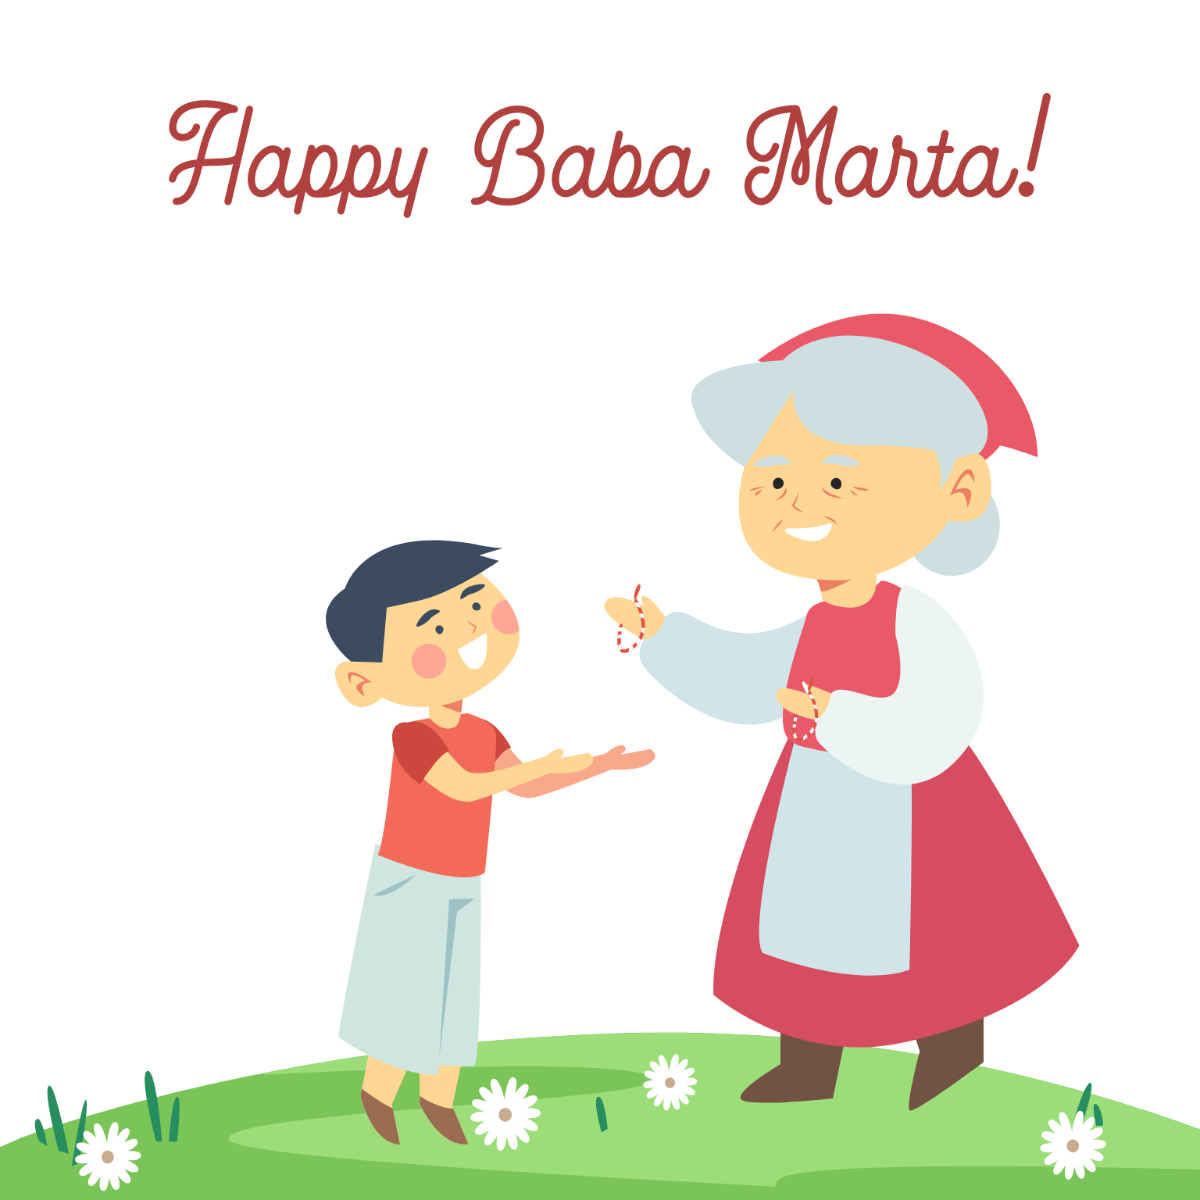 Happy Baba Marta Illustration Template